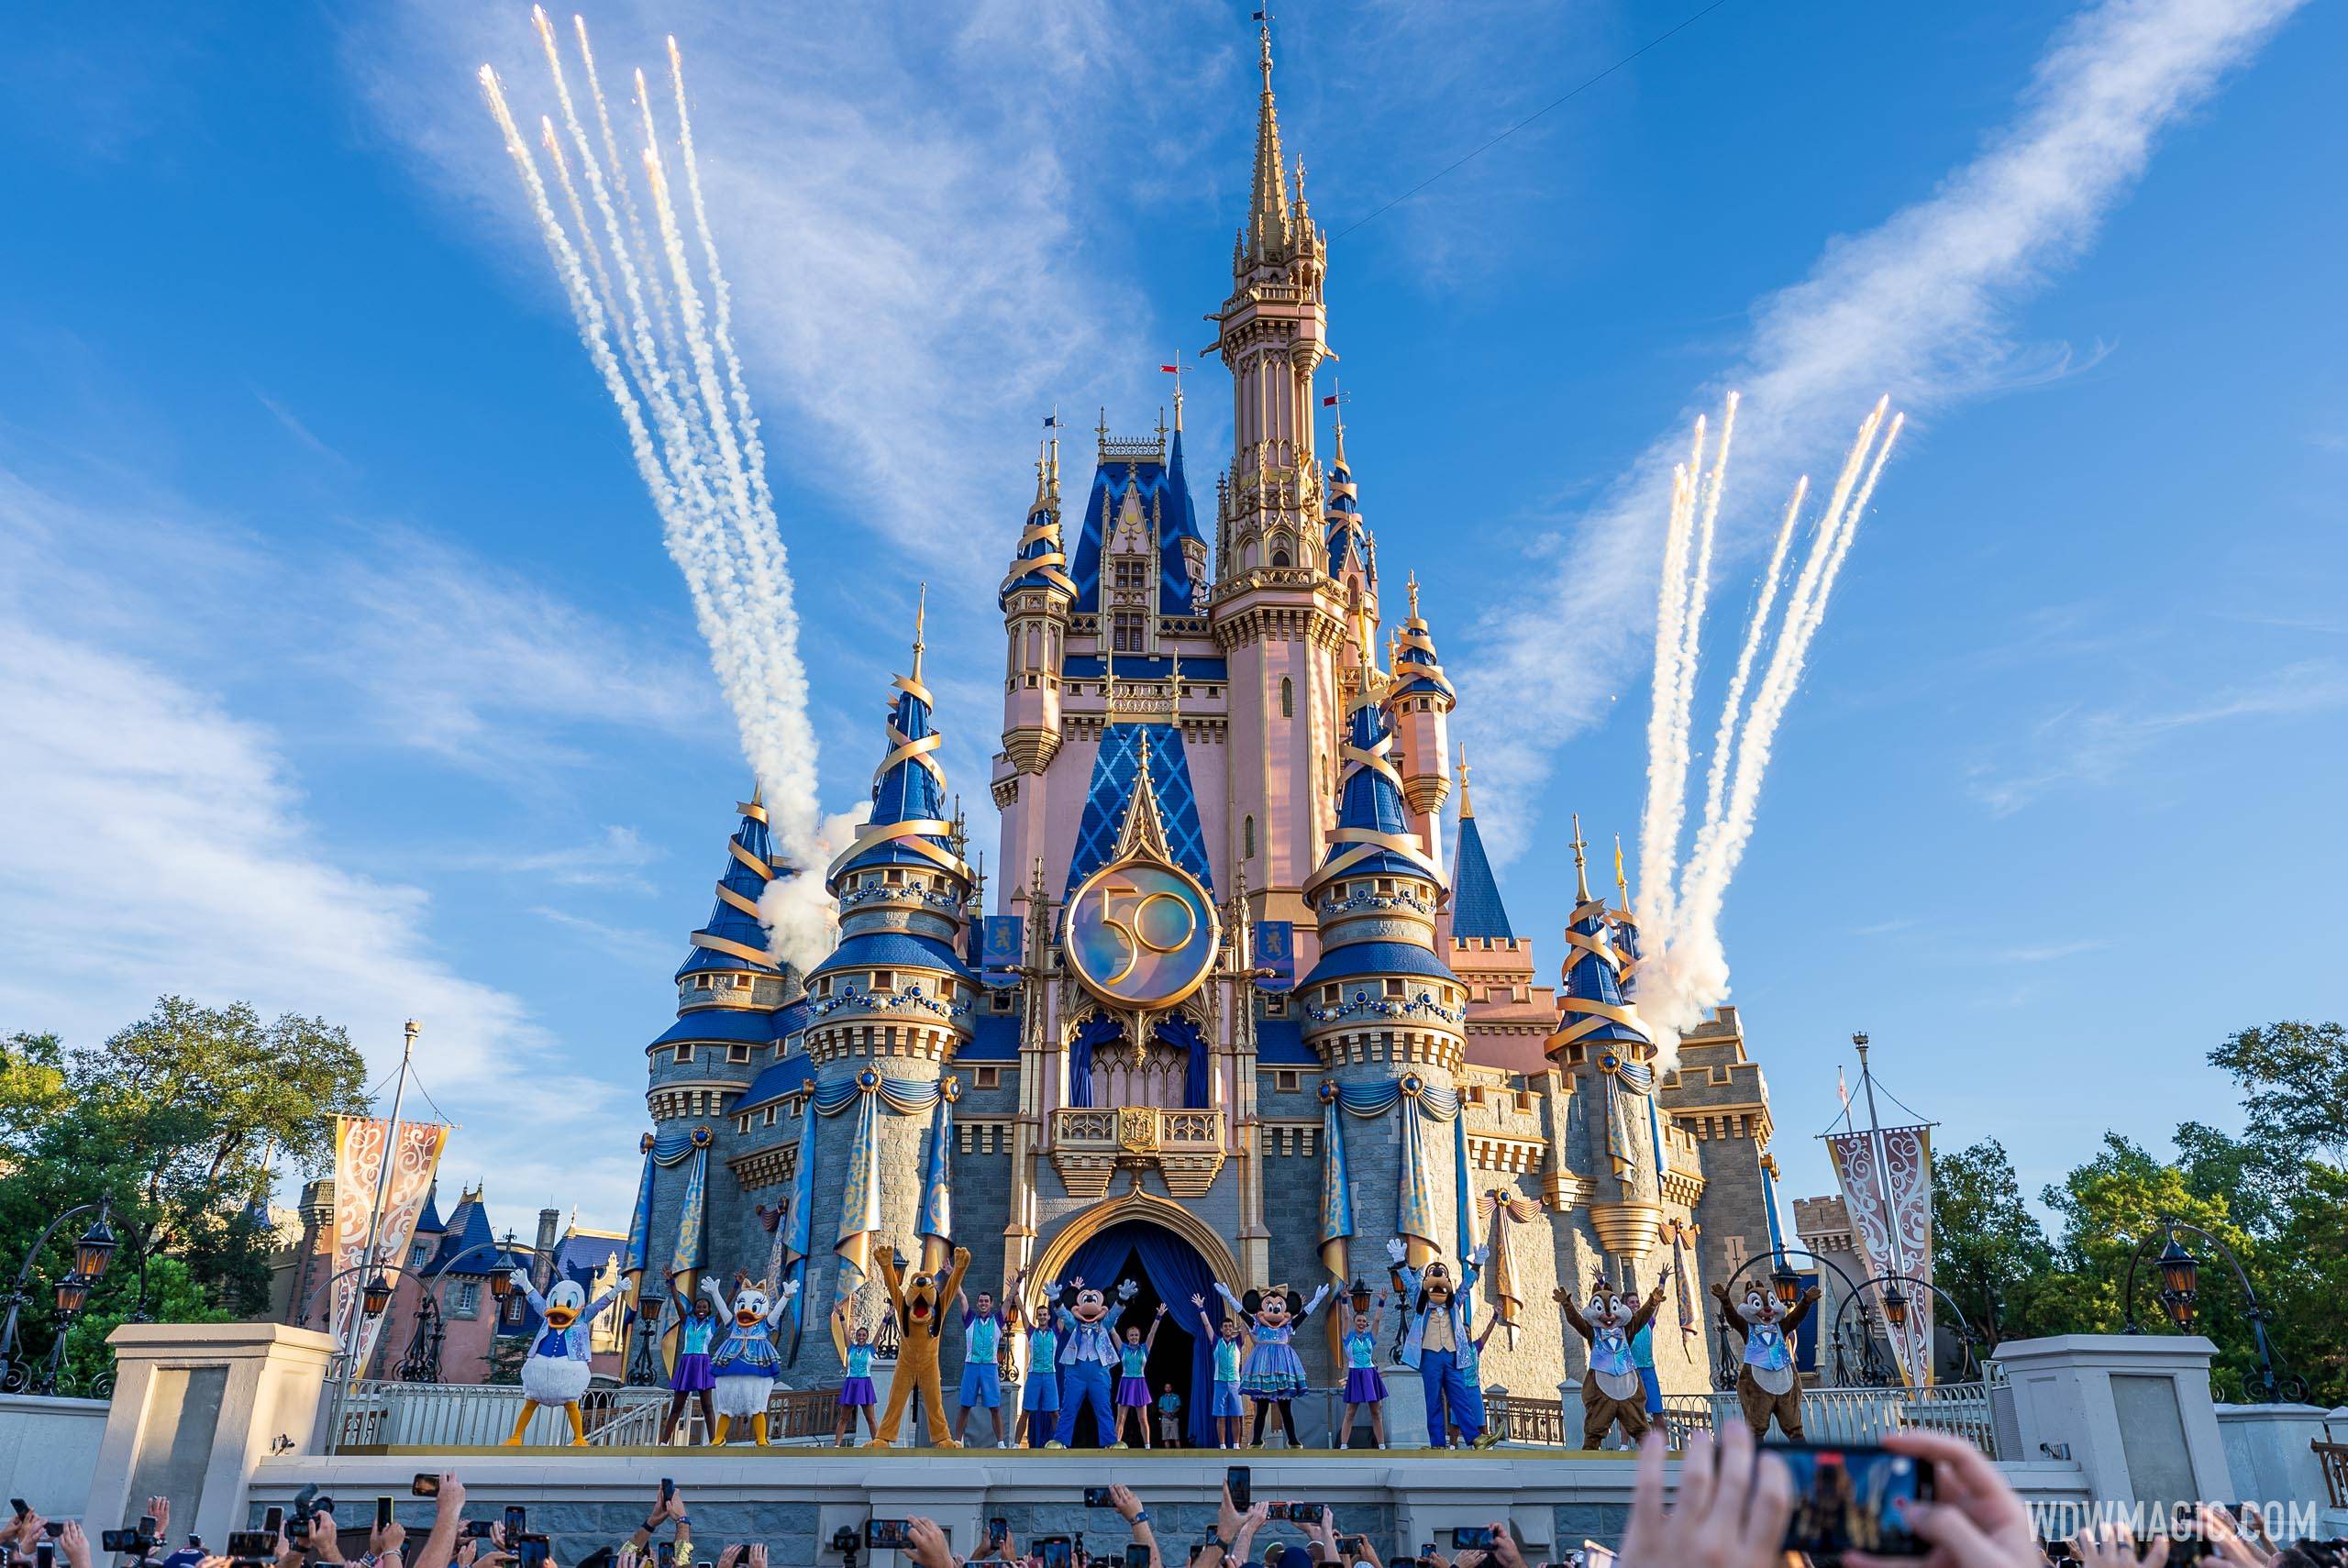 The World's Most Magical Celebration begins at Walt Disney World's Magic Kingdom